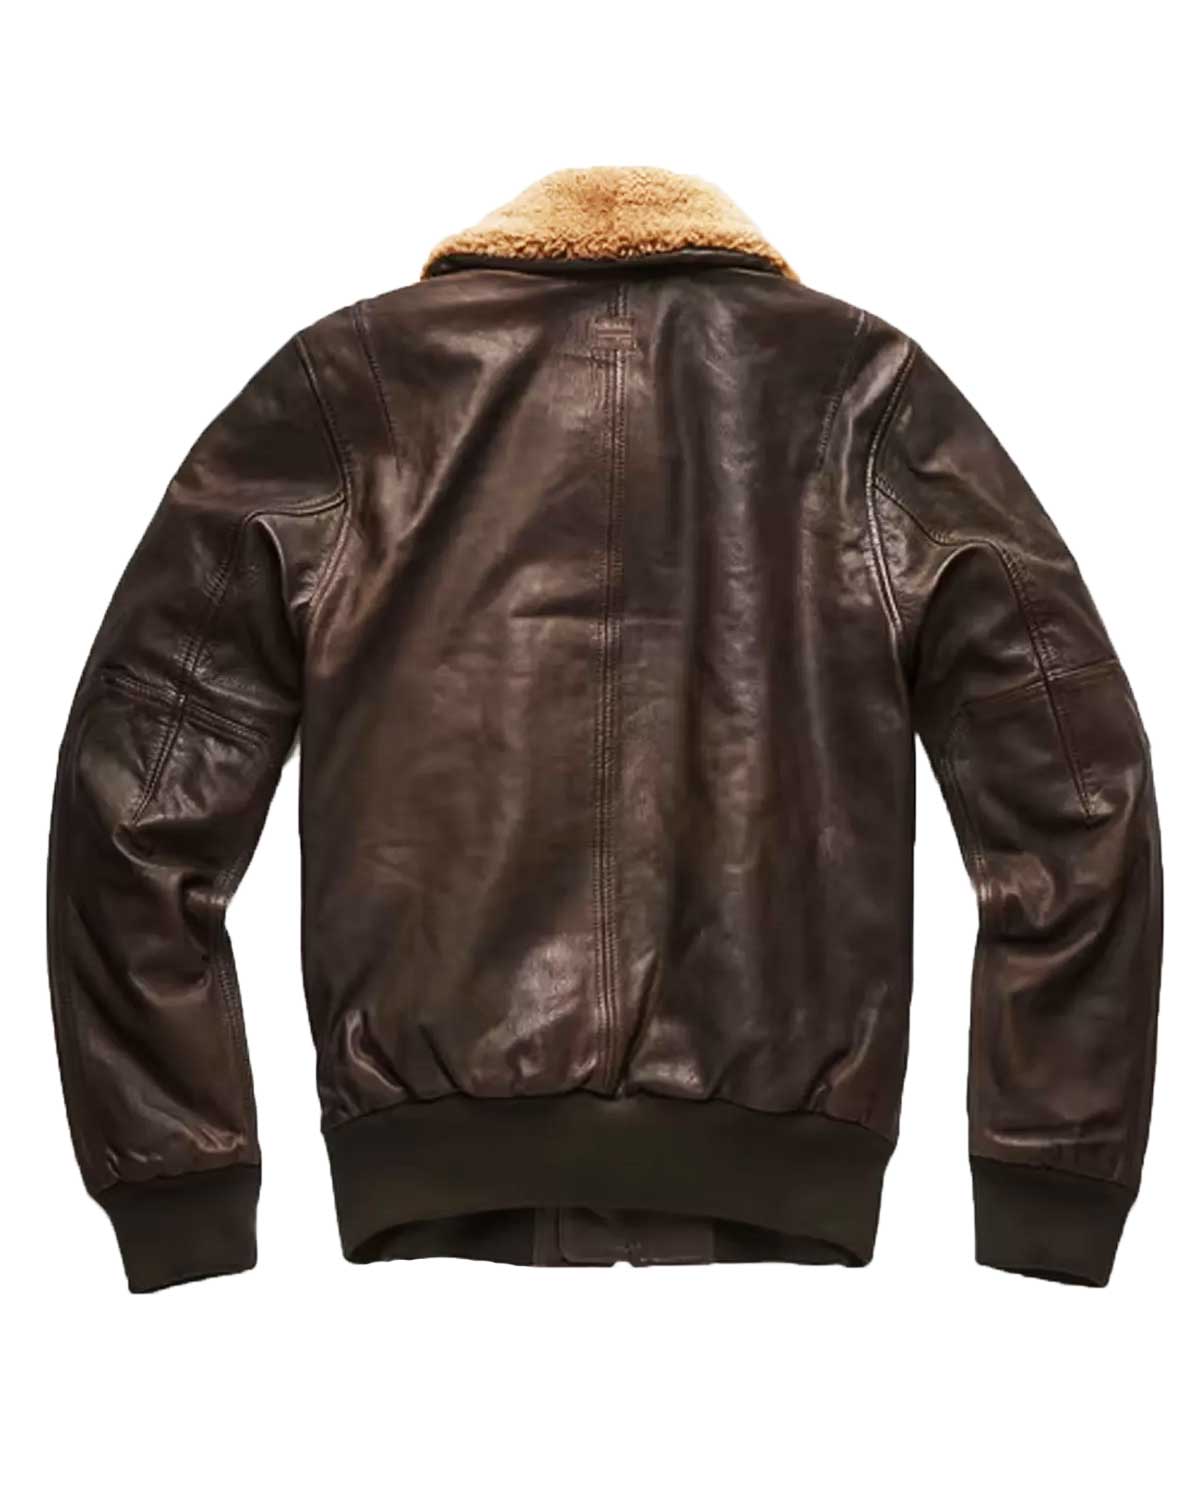 MotorCycleJackets Bollard Brown Leather Jacket with Detachable Fur Collar